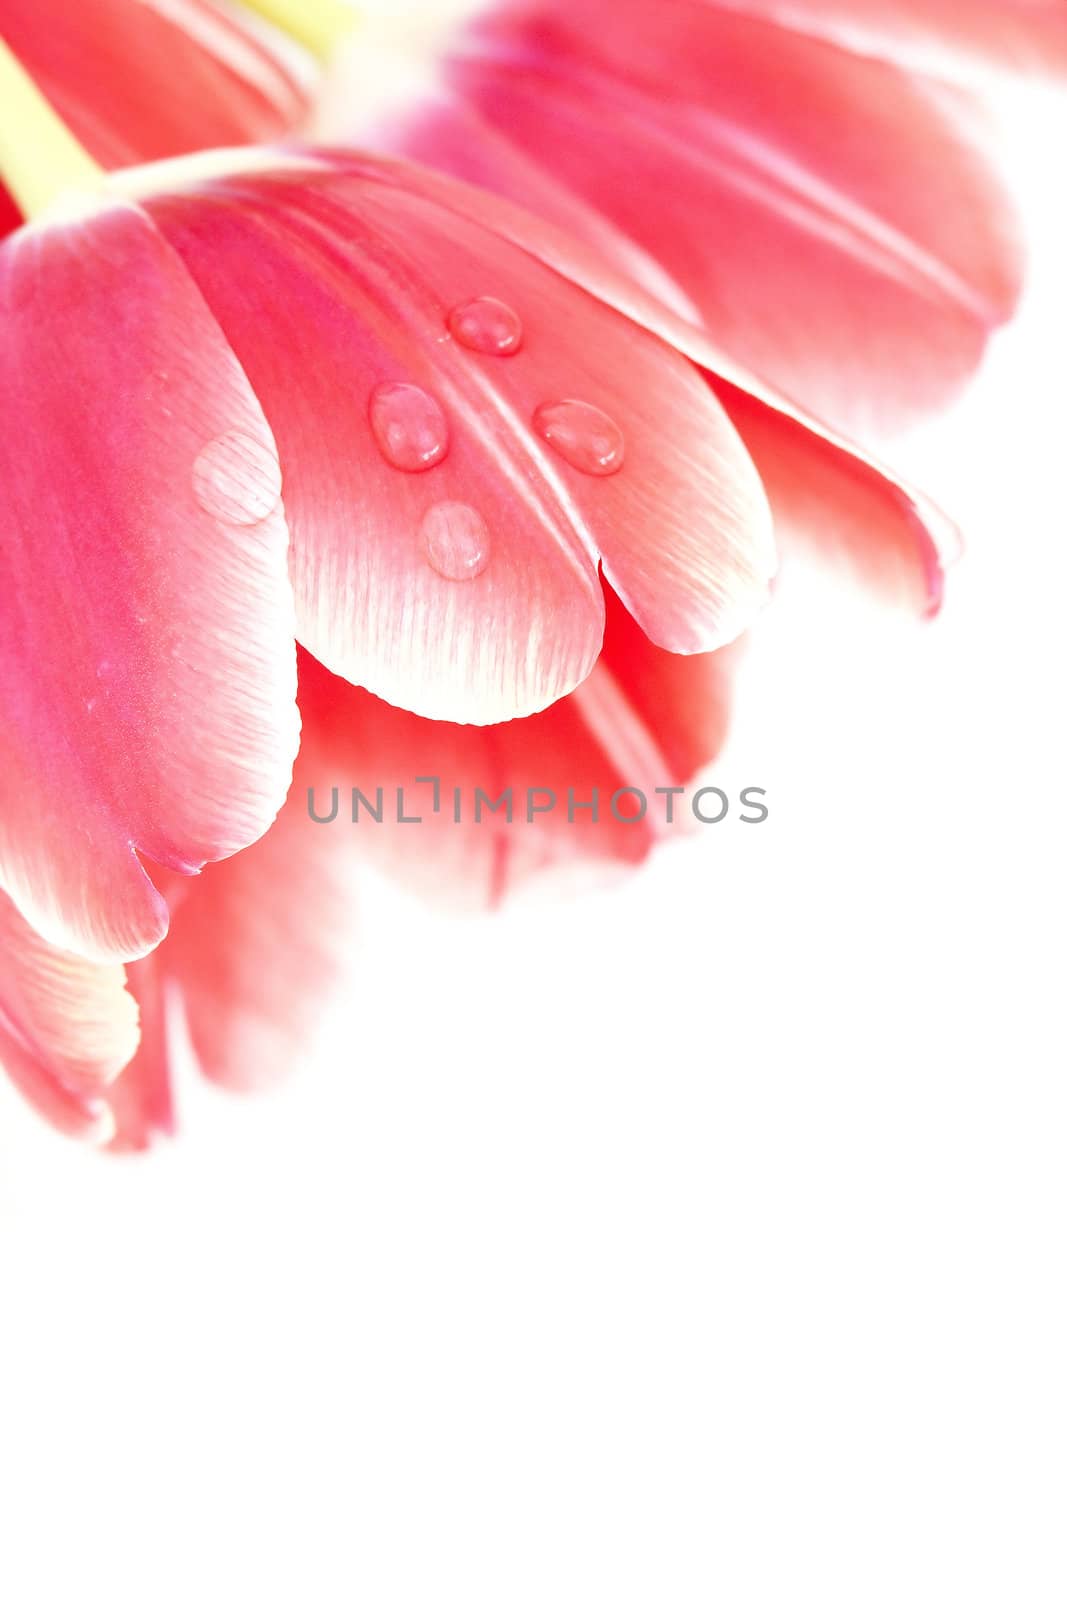 Macro shot of a water drop on red tulip petals 